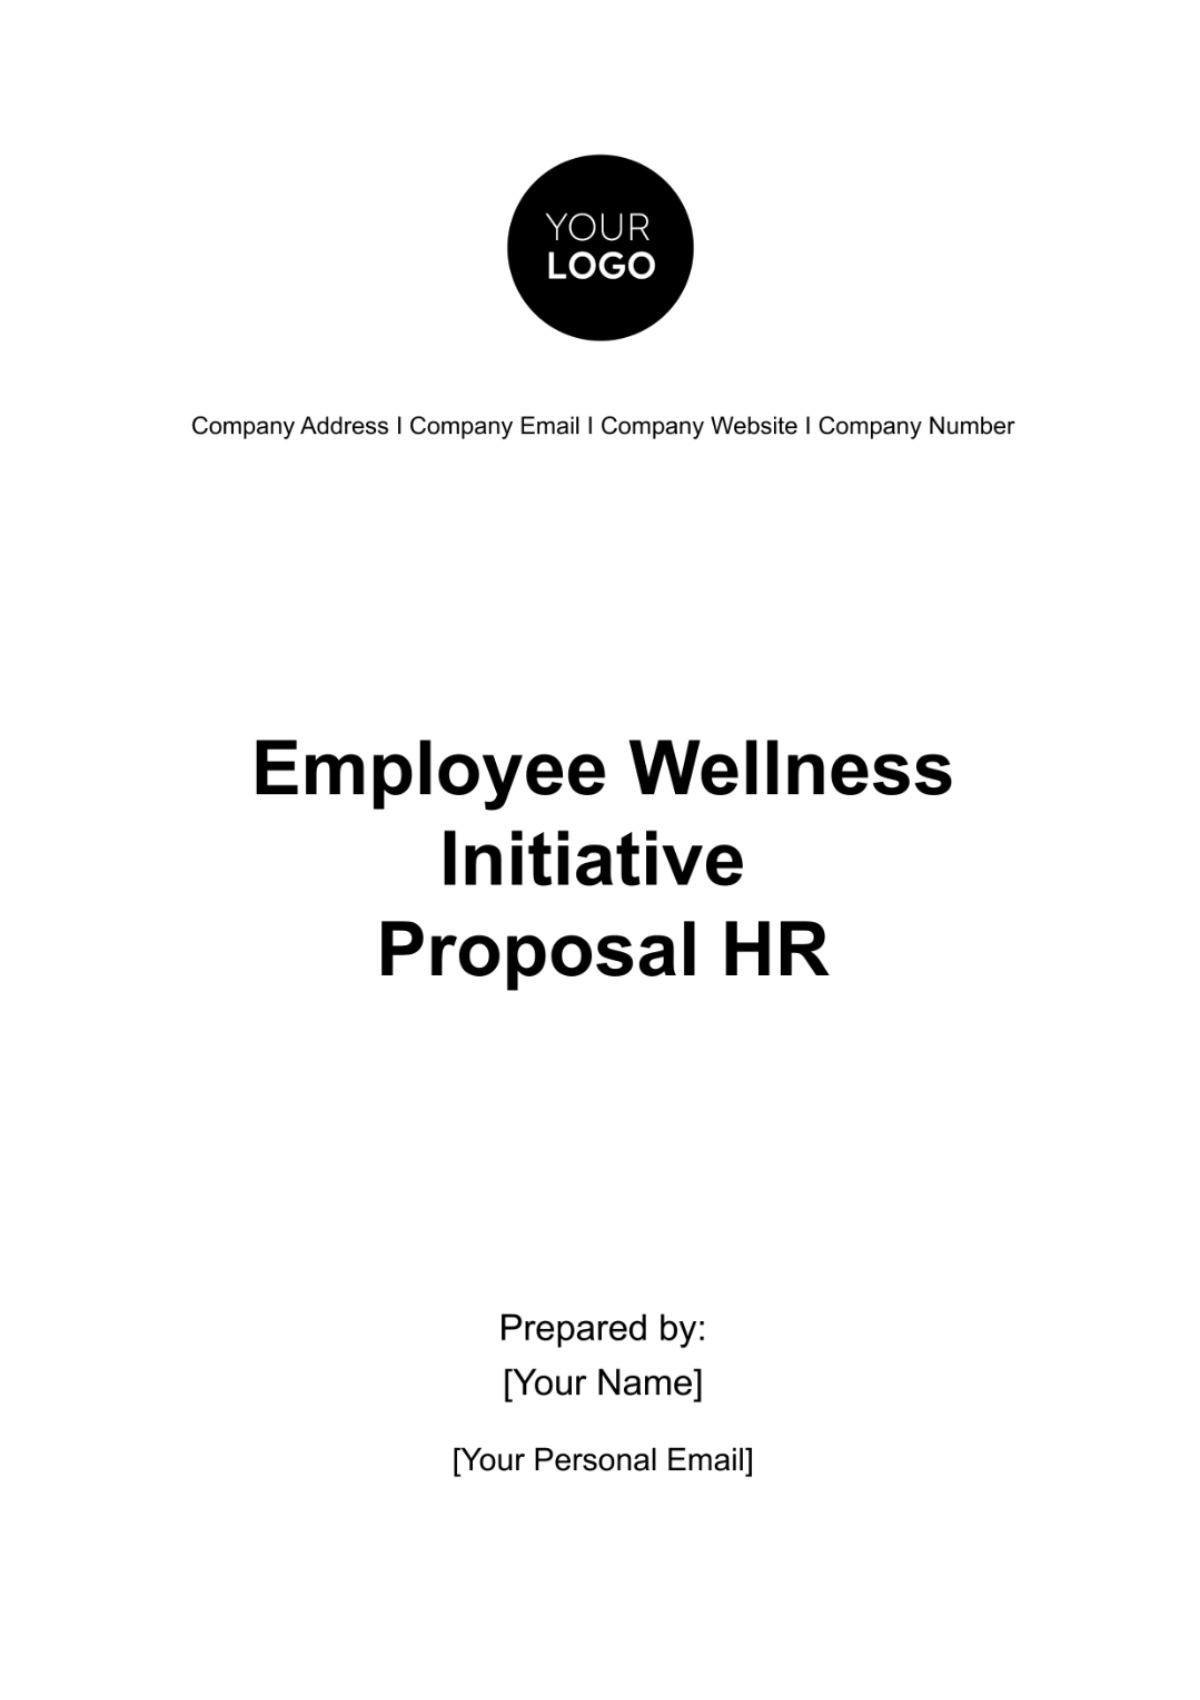 Free Employee Wellness Initiative Proposal HR Template